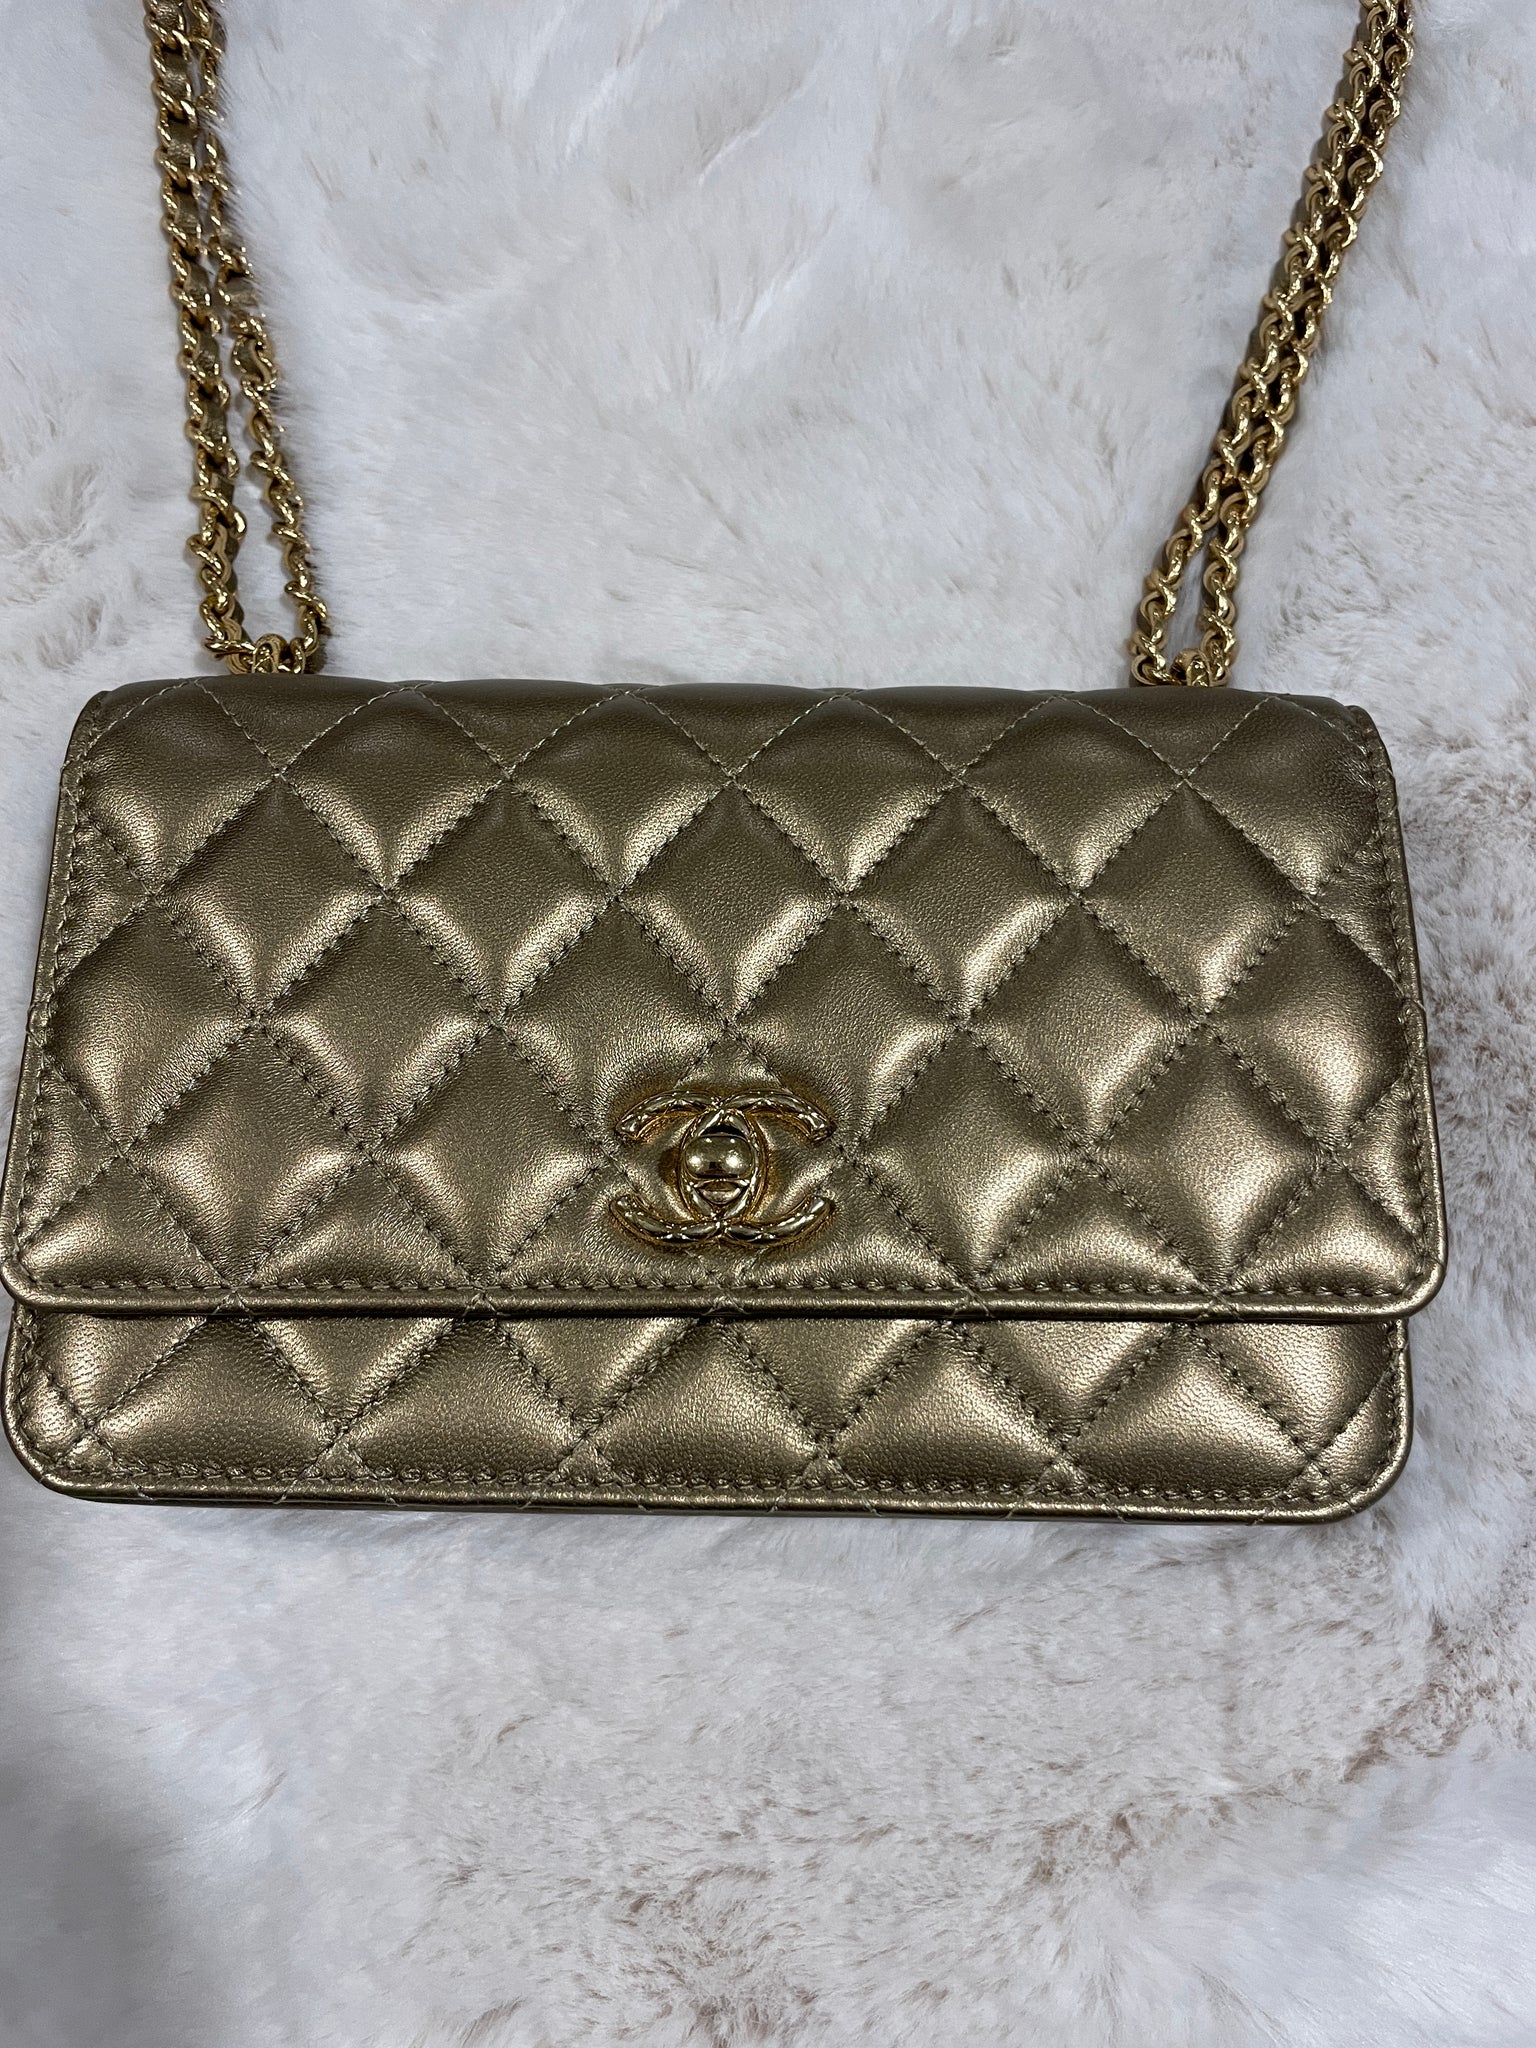 Chanel Gold WOC Wallet On Chain Handbag